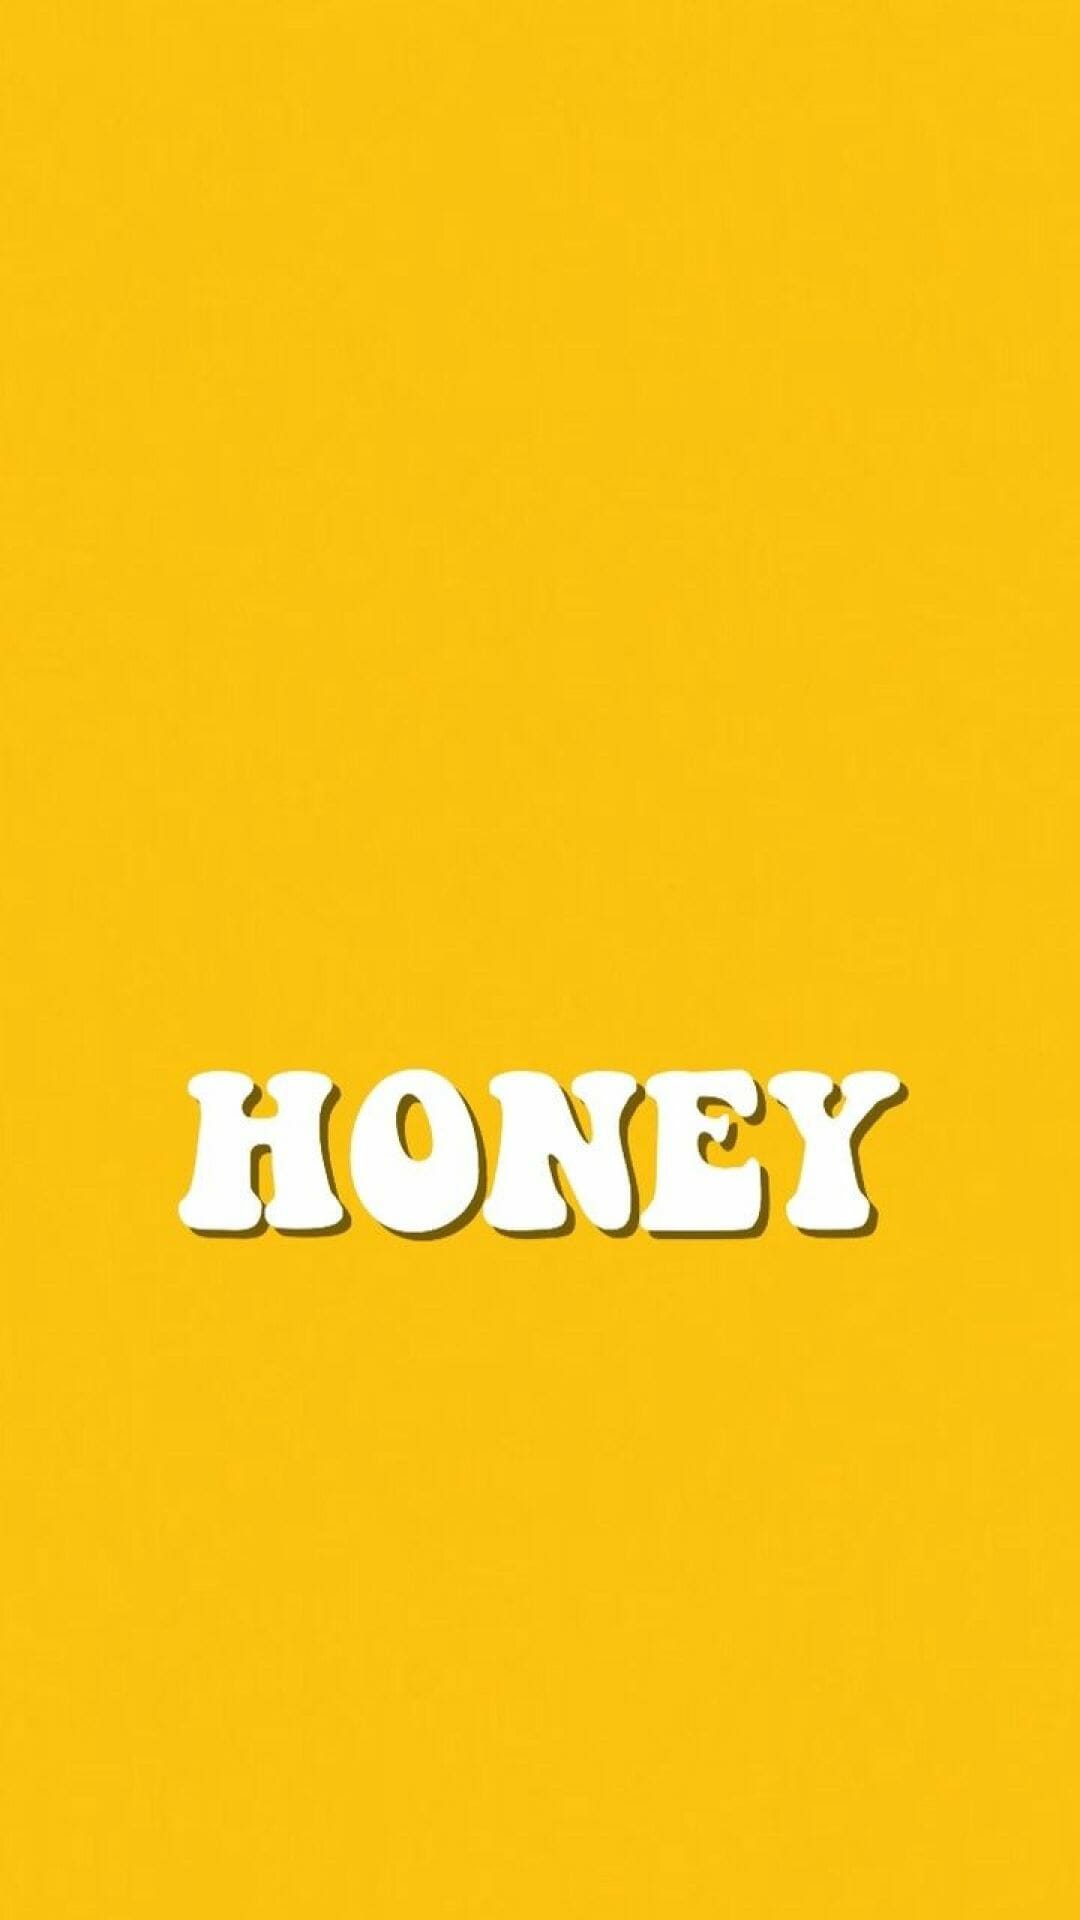 honey mustard yellow wallpaper discovered